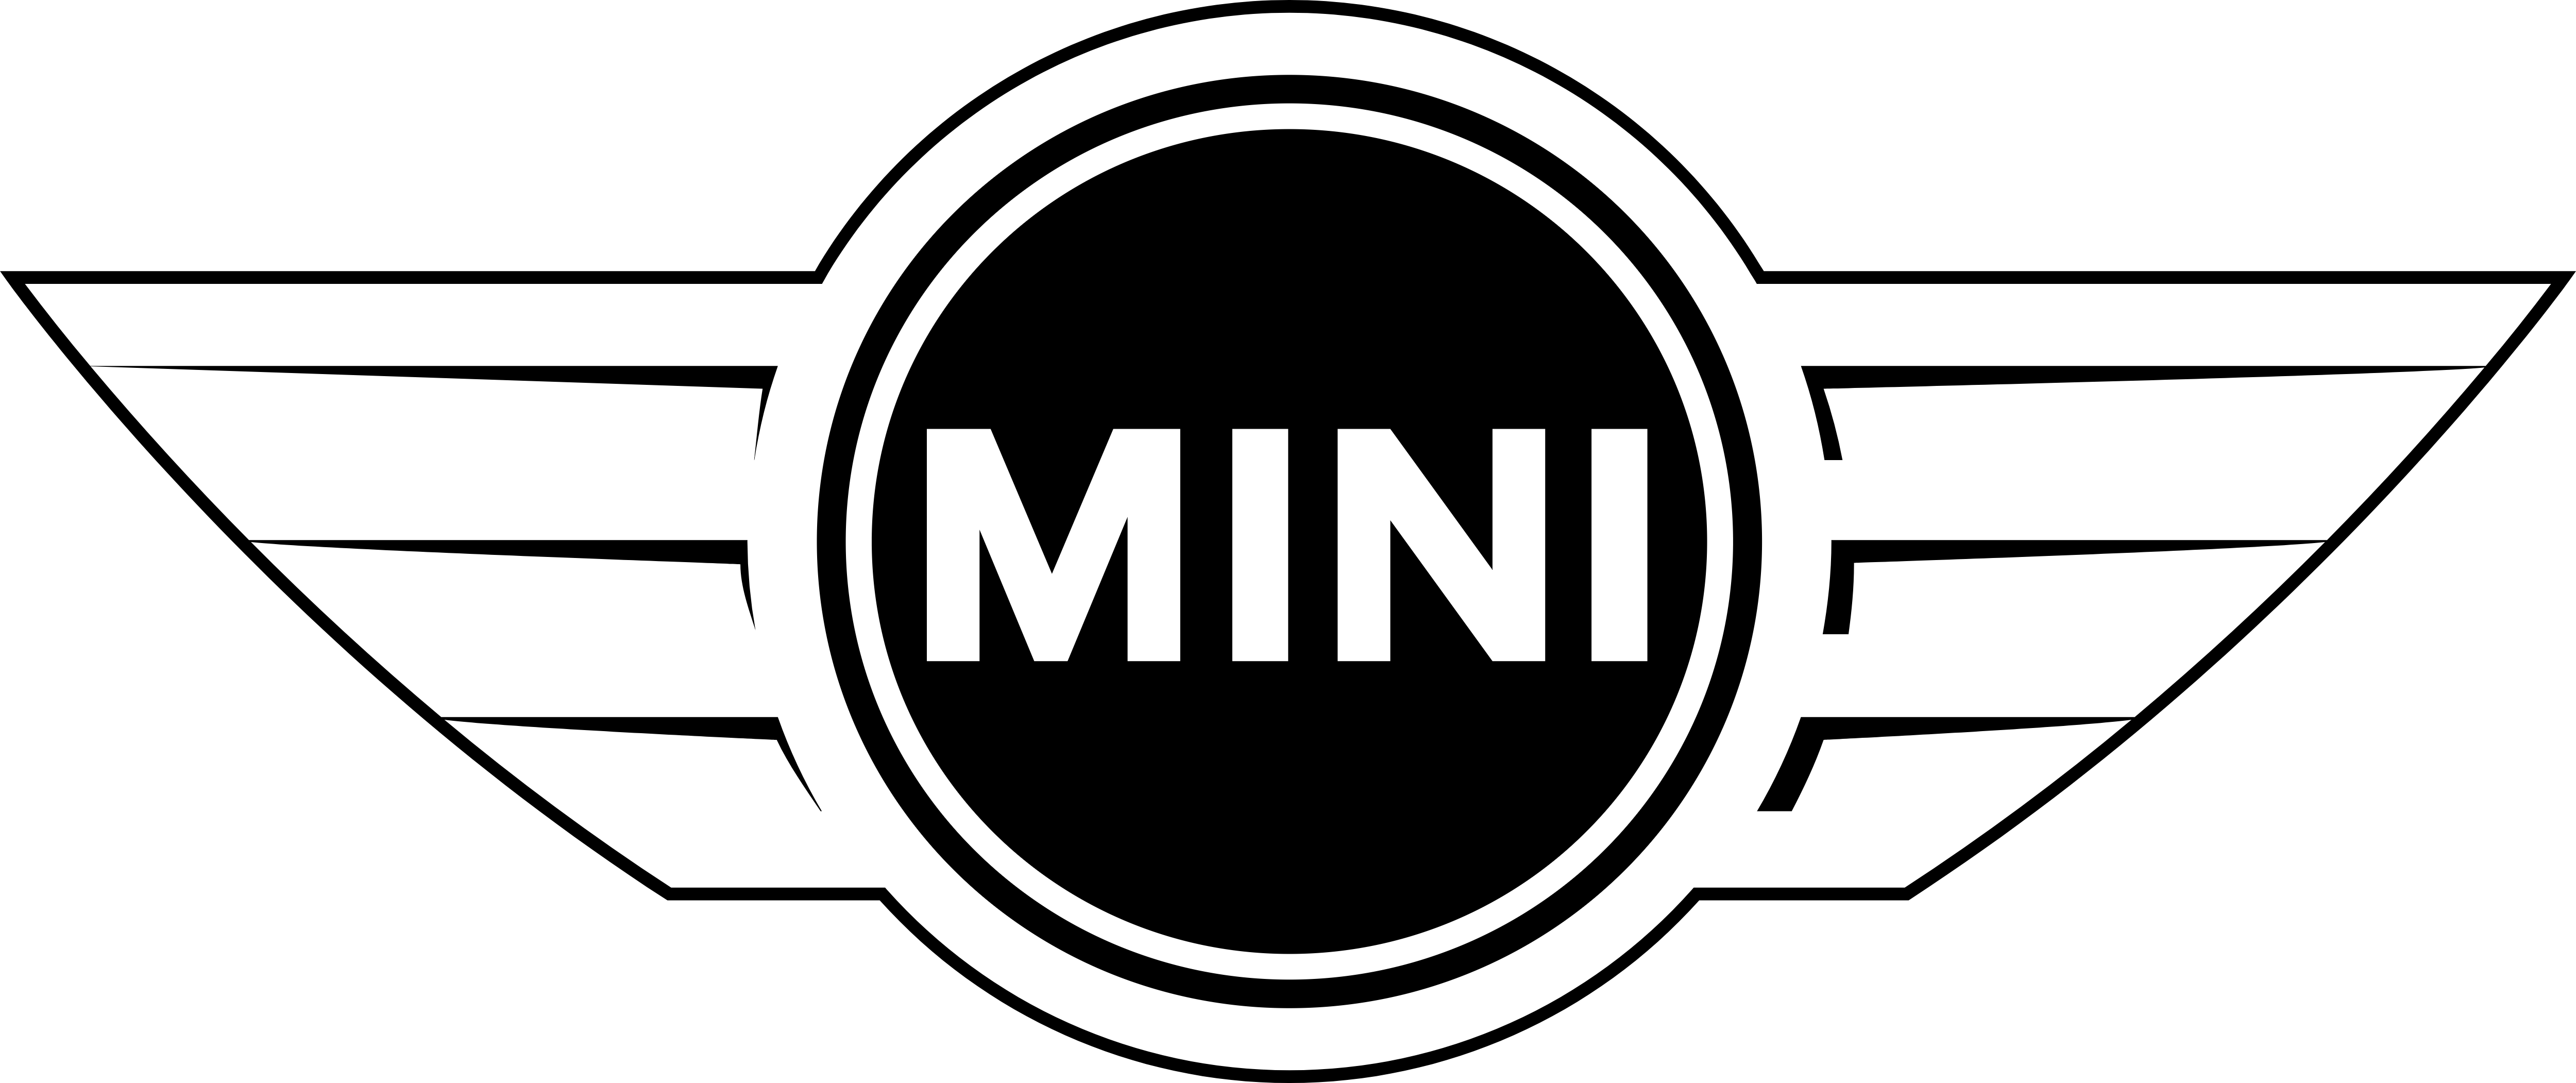 Logo Mini Cooper Bmw Car Free HQ Image PNG Image